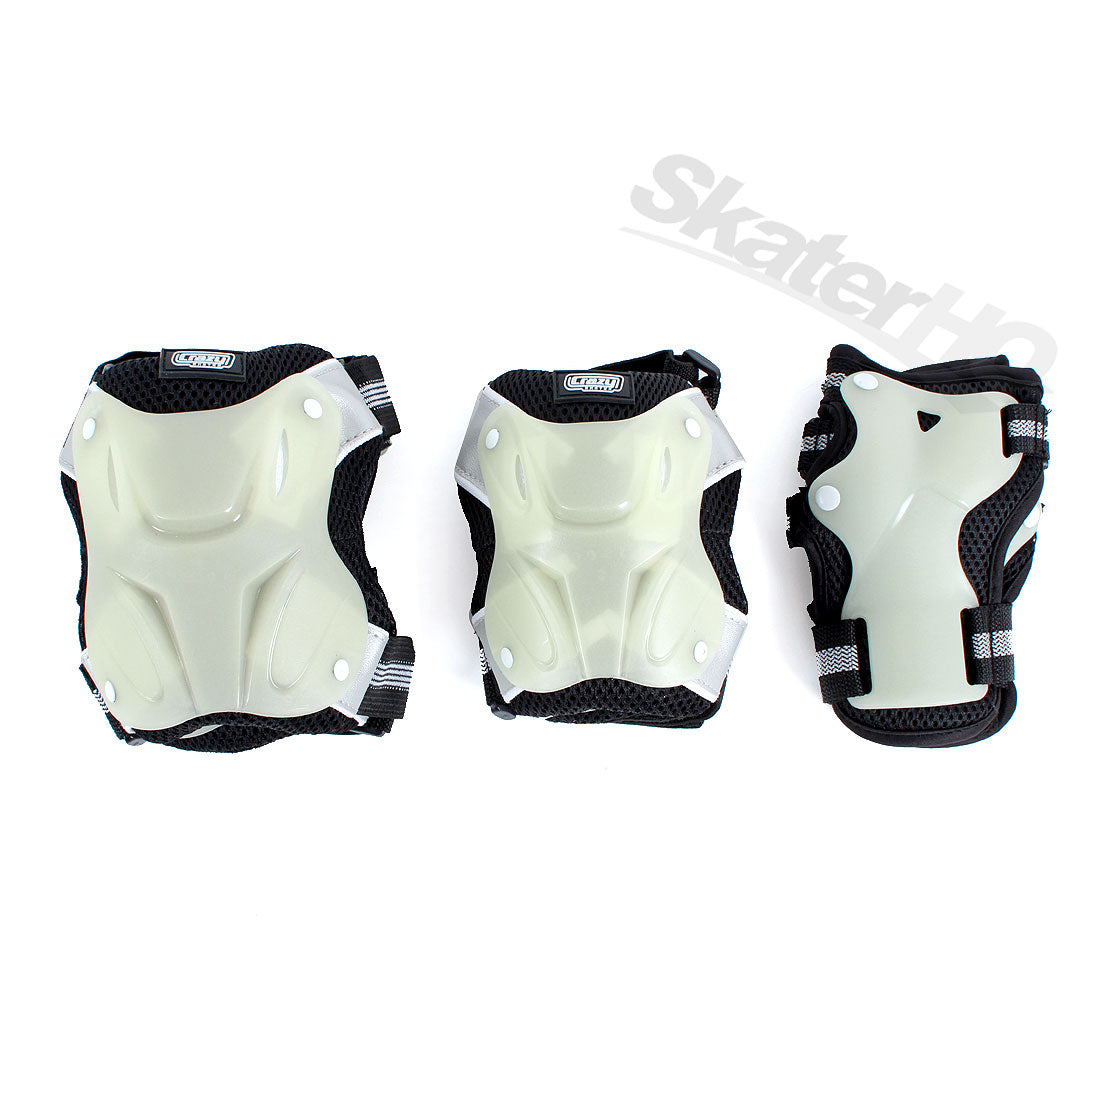 Crazy Glow Protective 3-Pack - Black - Medium Protective Gear